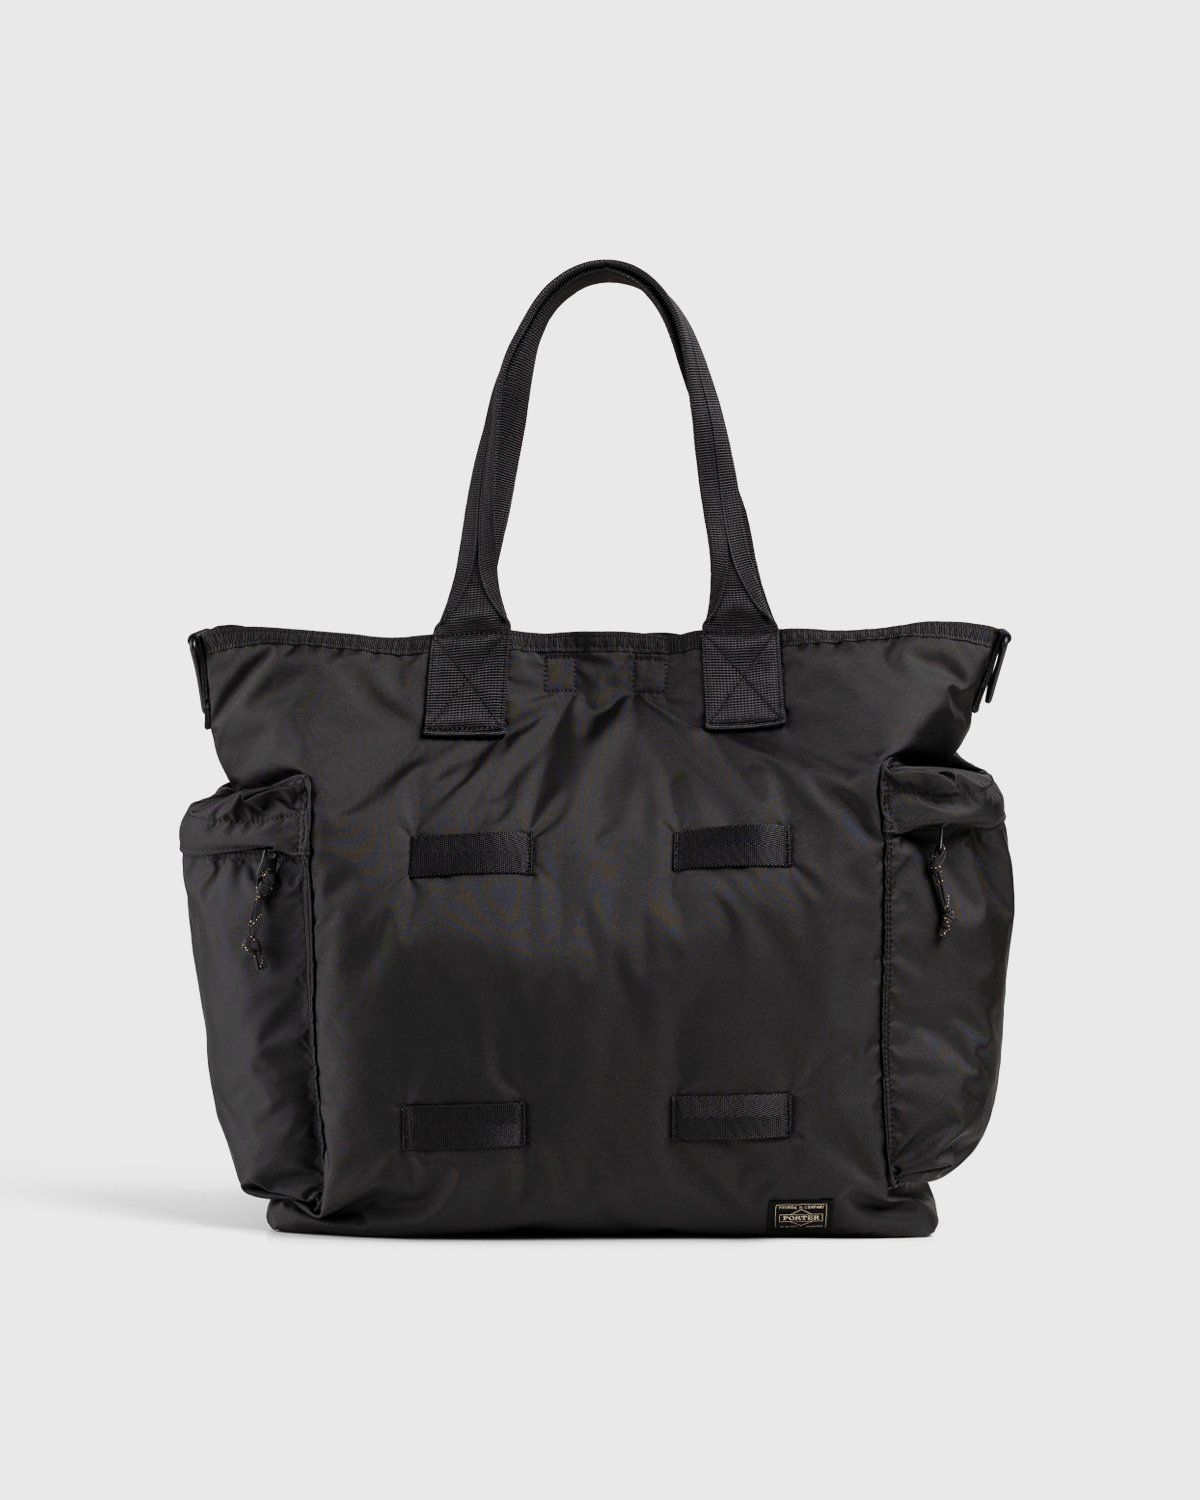 Porter-Yoshida & Co. – 2-Way Tote Bag Black - Bags - Black - Image 1